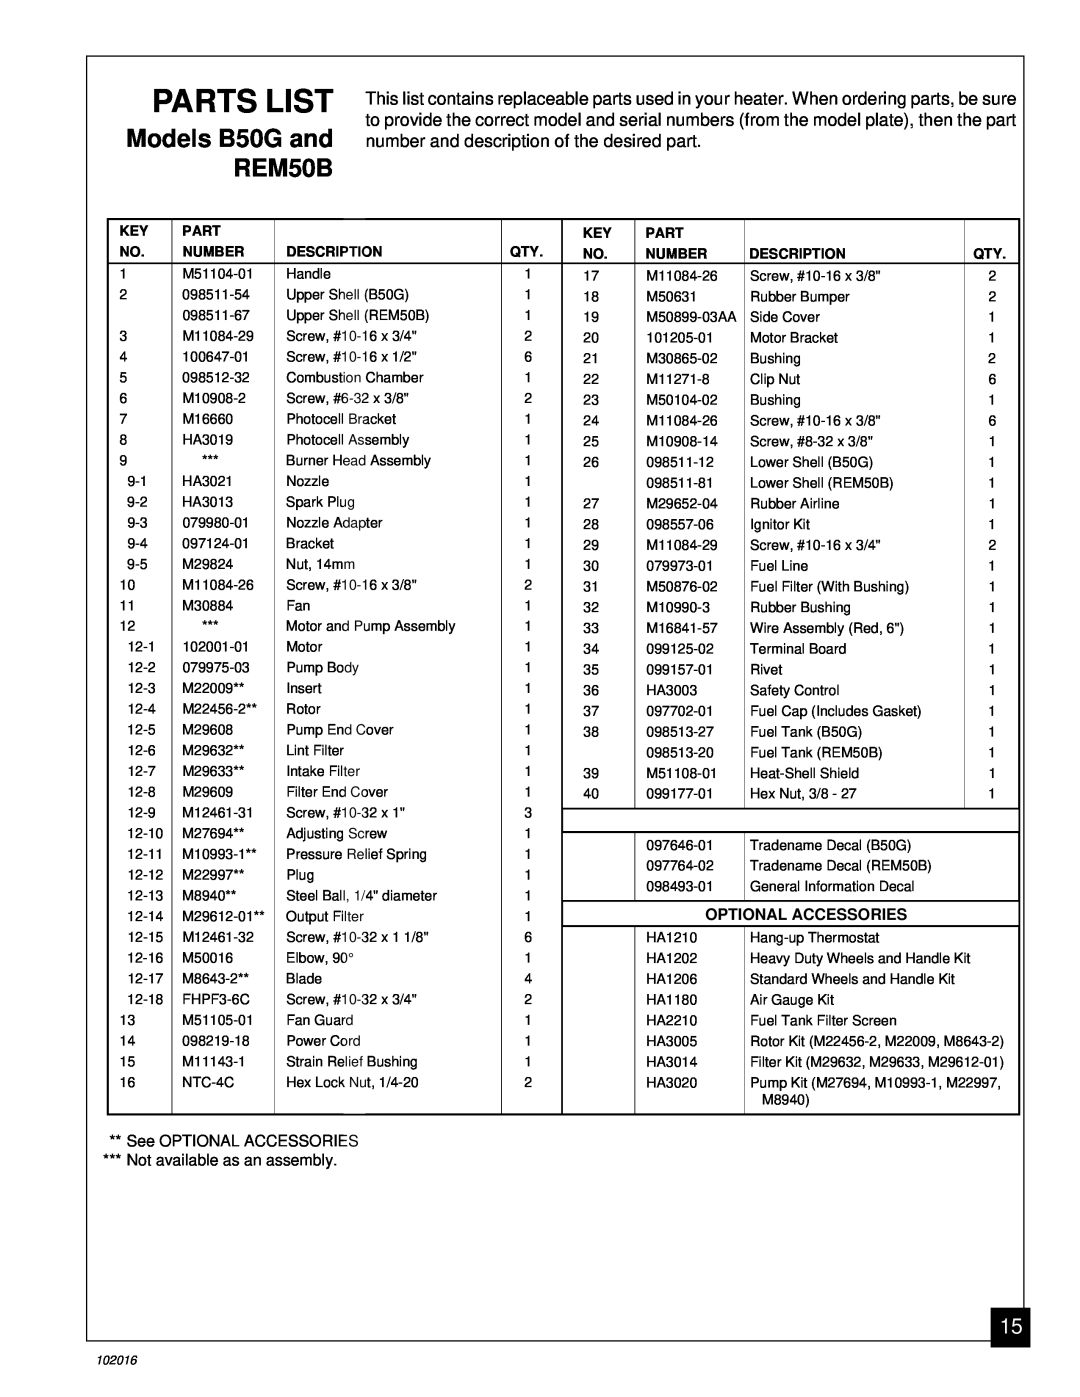 Desa owner manual Parts List, Models B50G and REM50B, Optional Accessories, Number, Description 